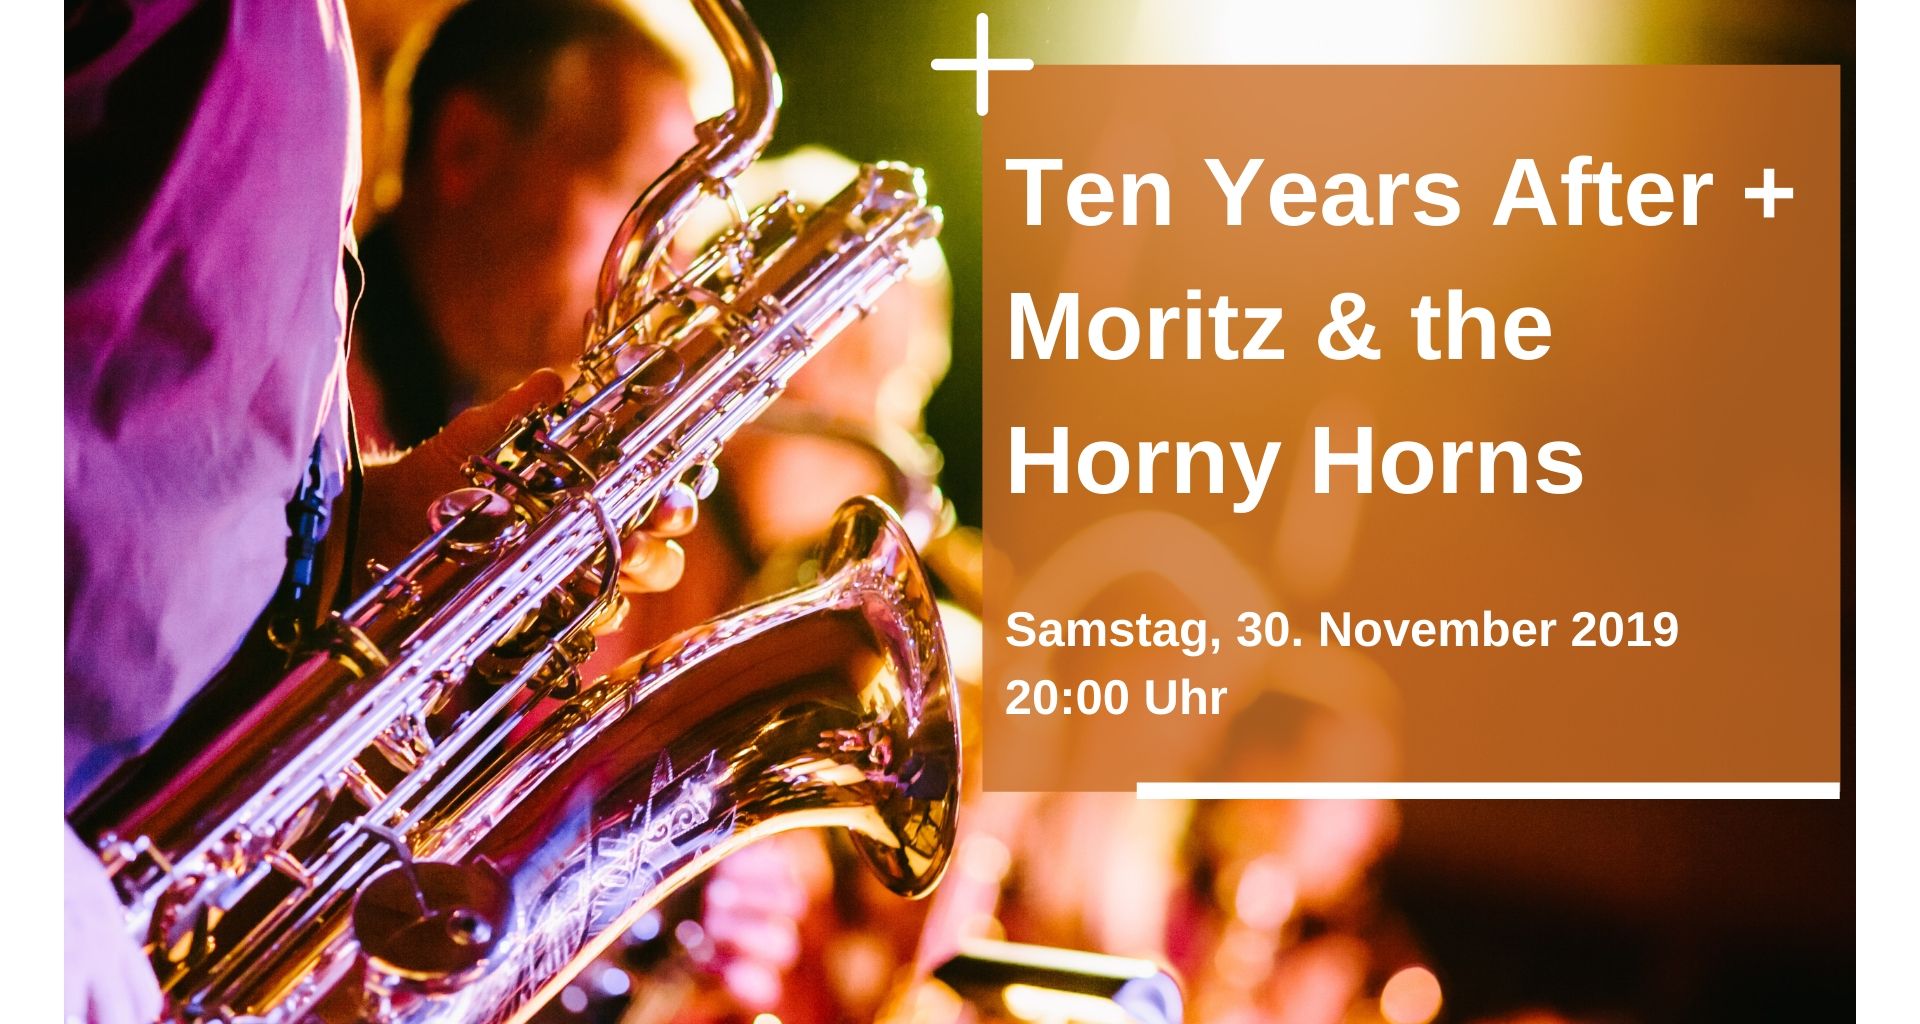 Top Event - Ten Years After + Moritz & the Horny Horns